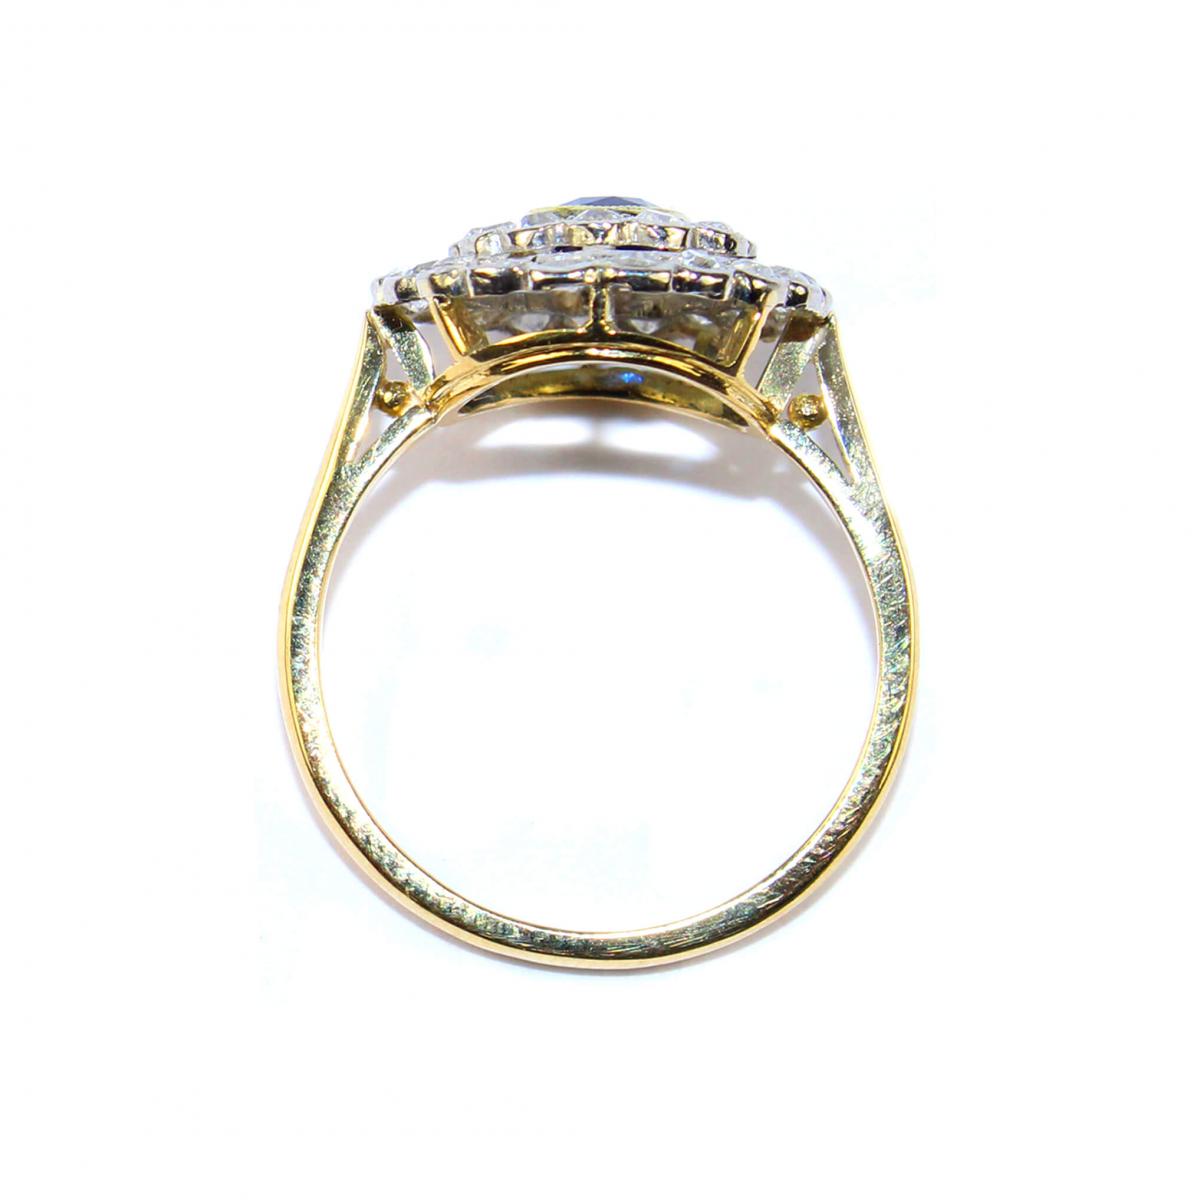 Edwardian Sapphire & Diamond Double Cluster Ring c.1920